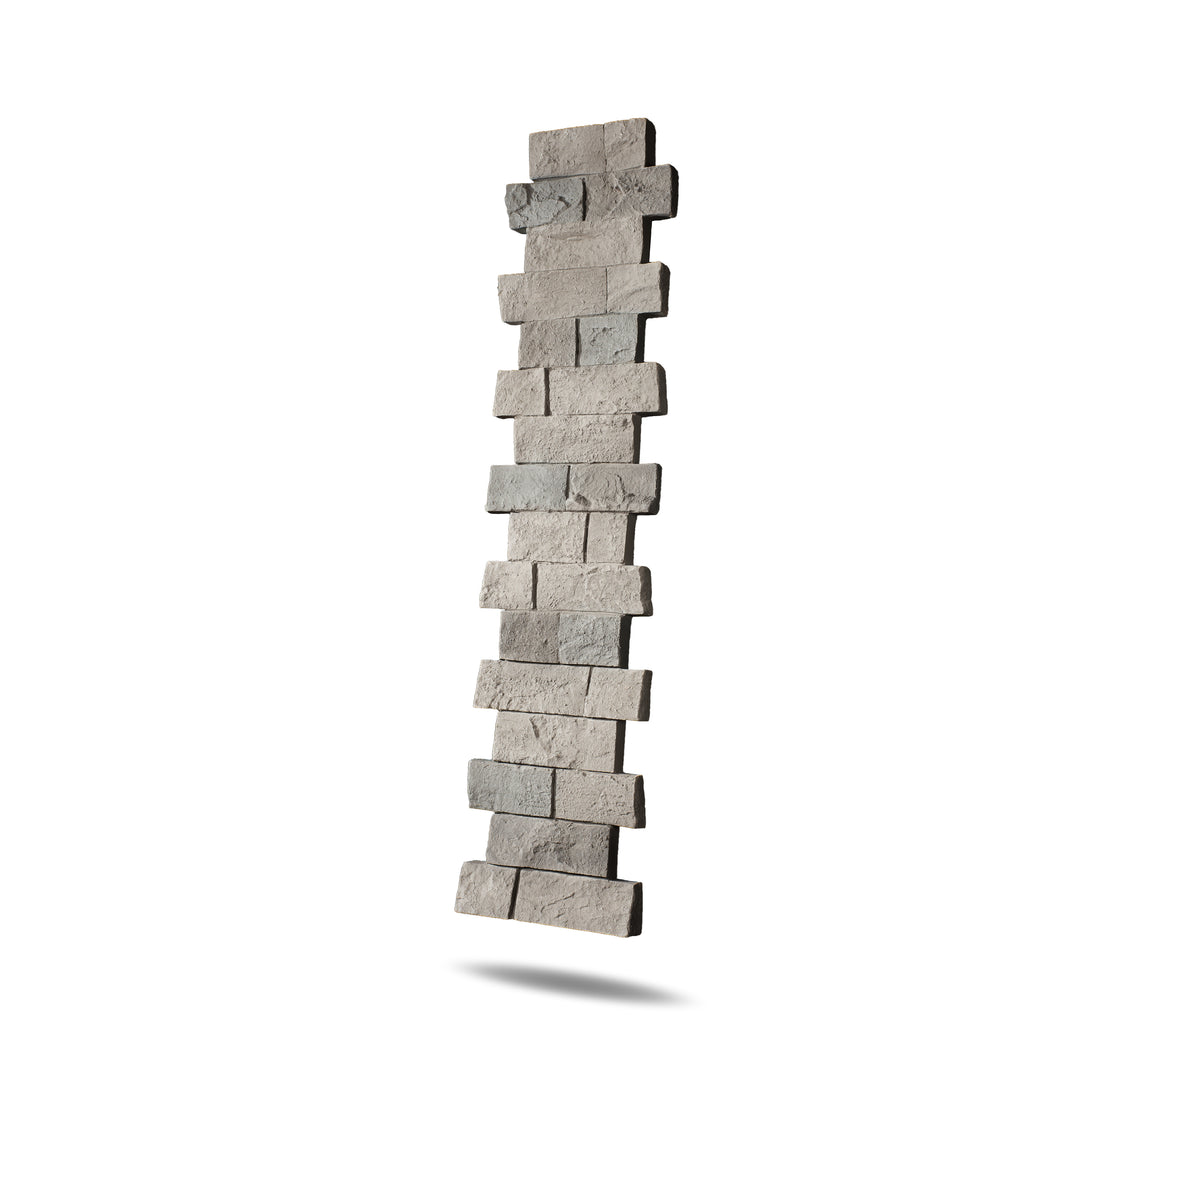 Faux Ledge Stone Pillar Panel - Grey Blend